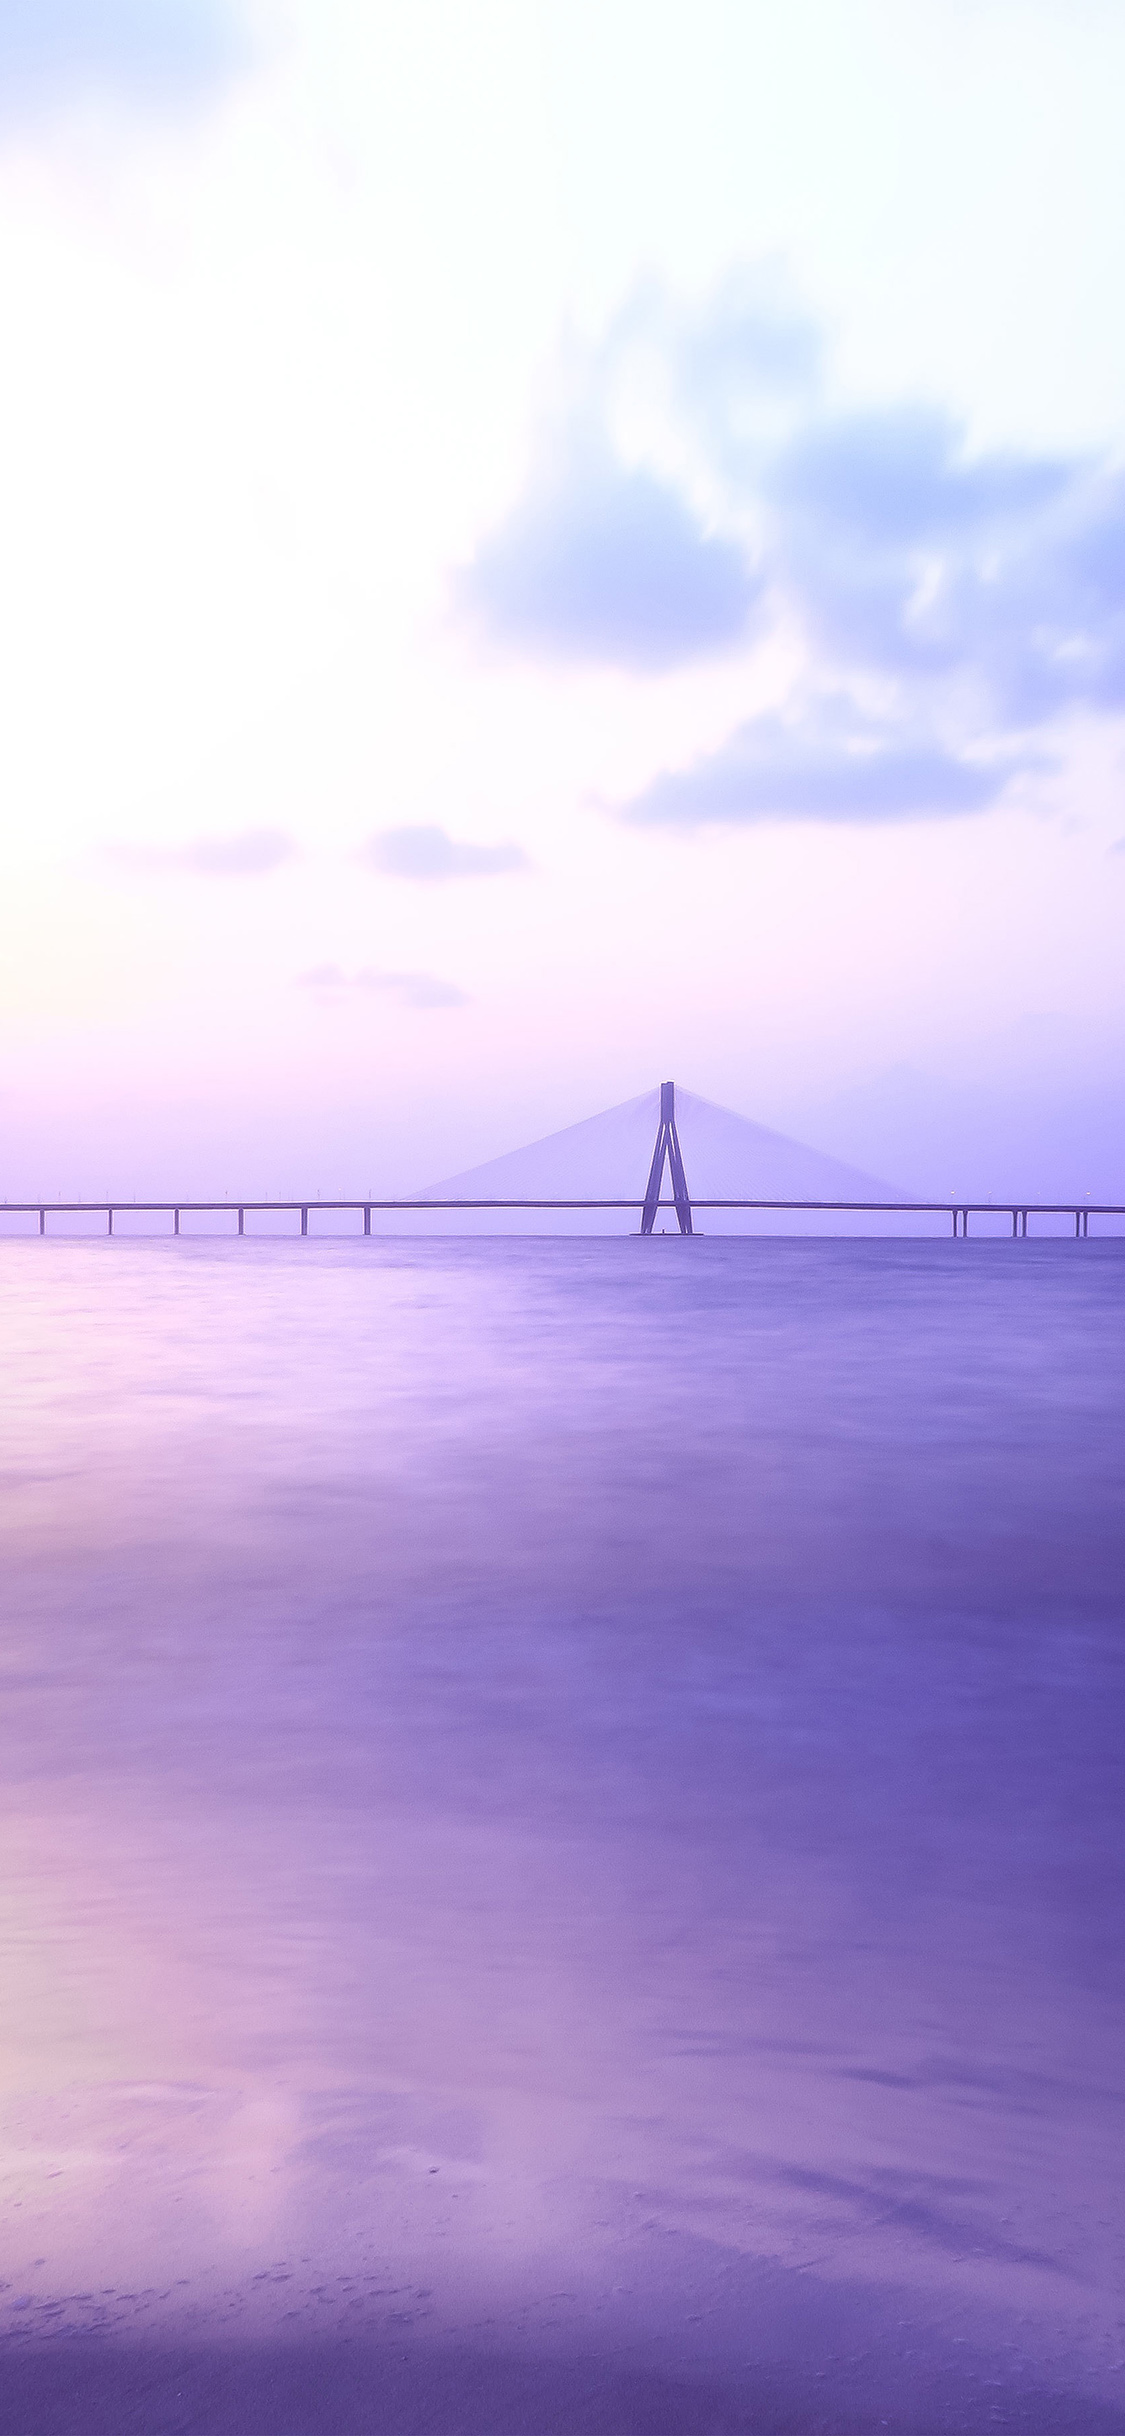 iPhone X wallpaper. city bridge purple river nature